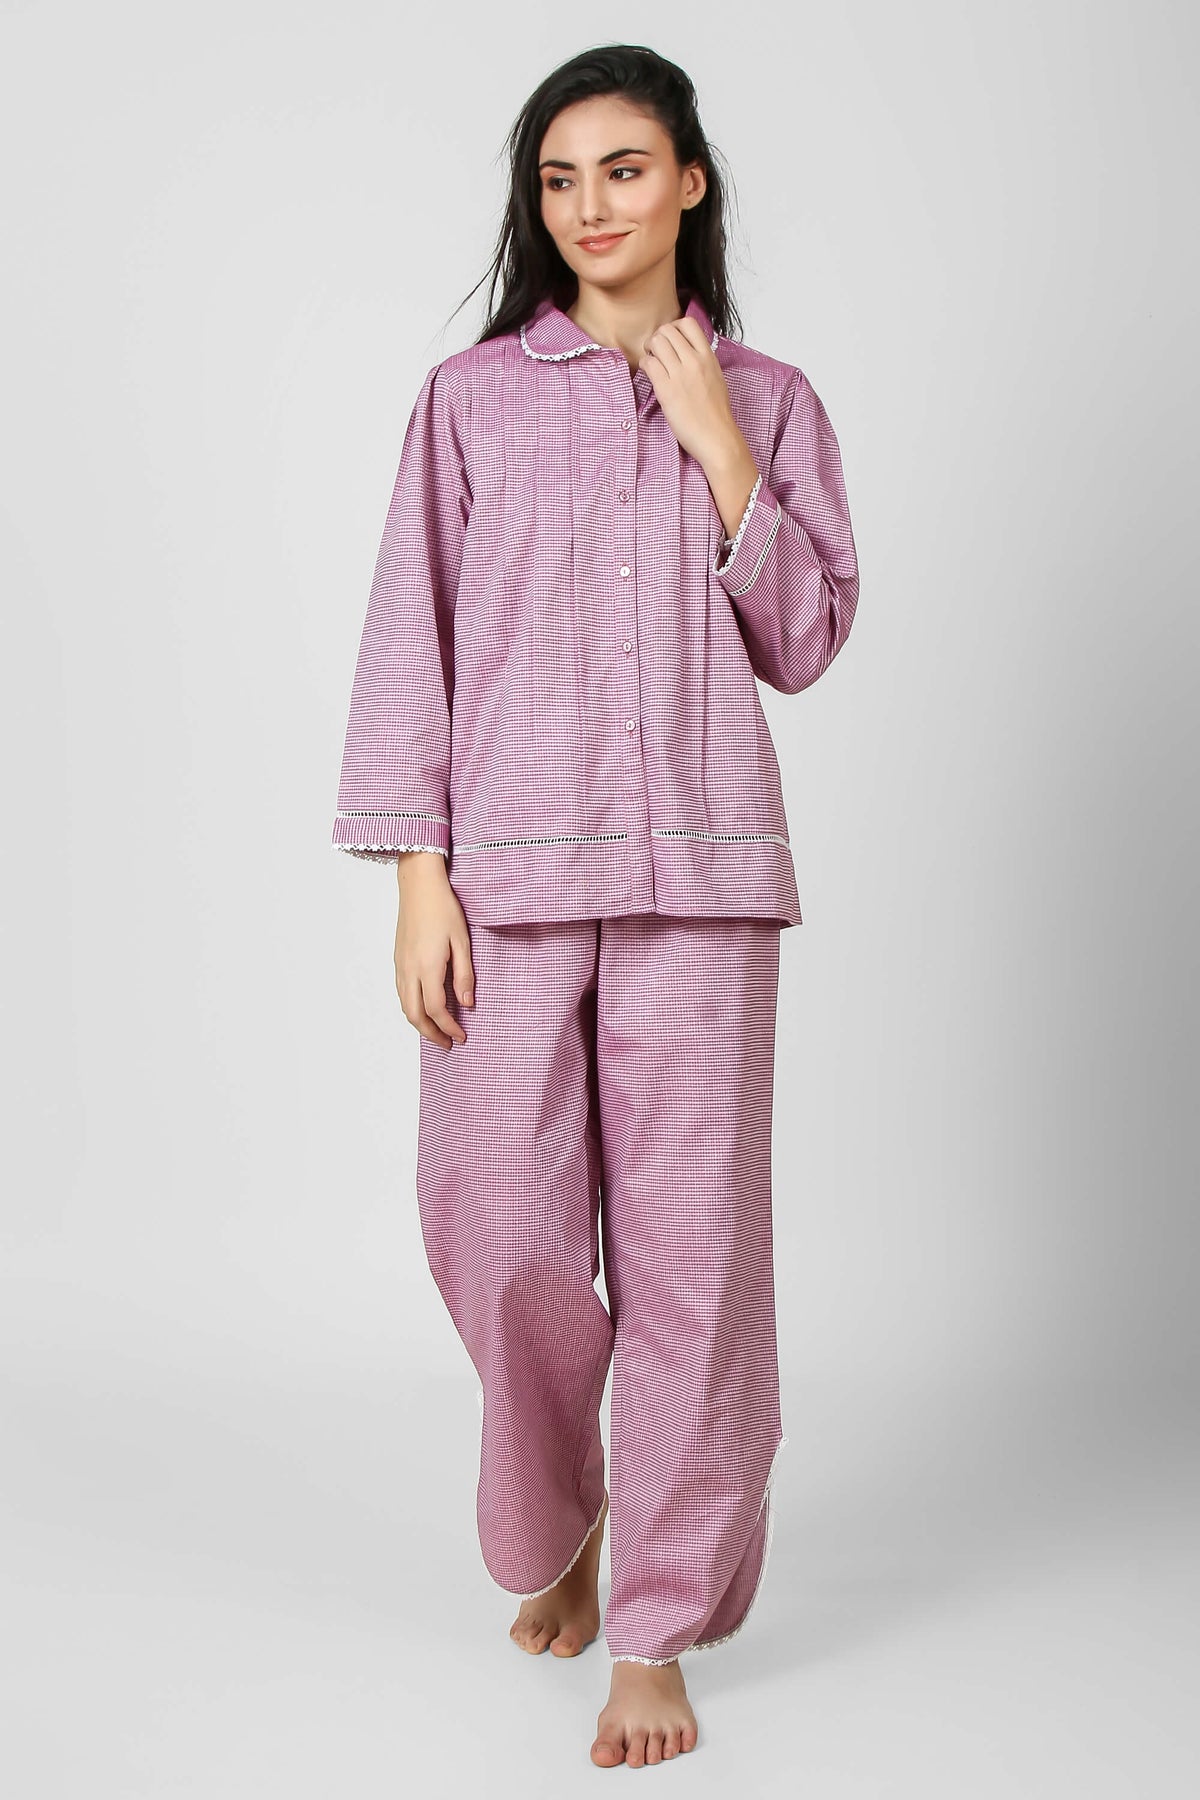 Veva FS, Signature Pyjama Suit